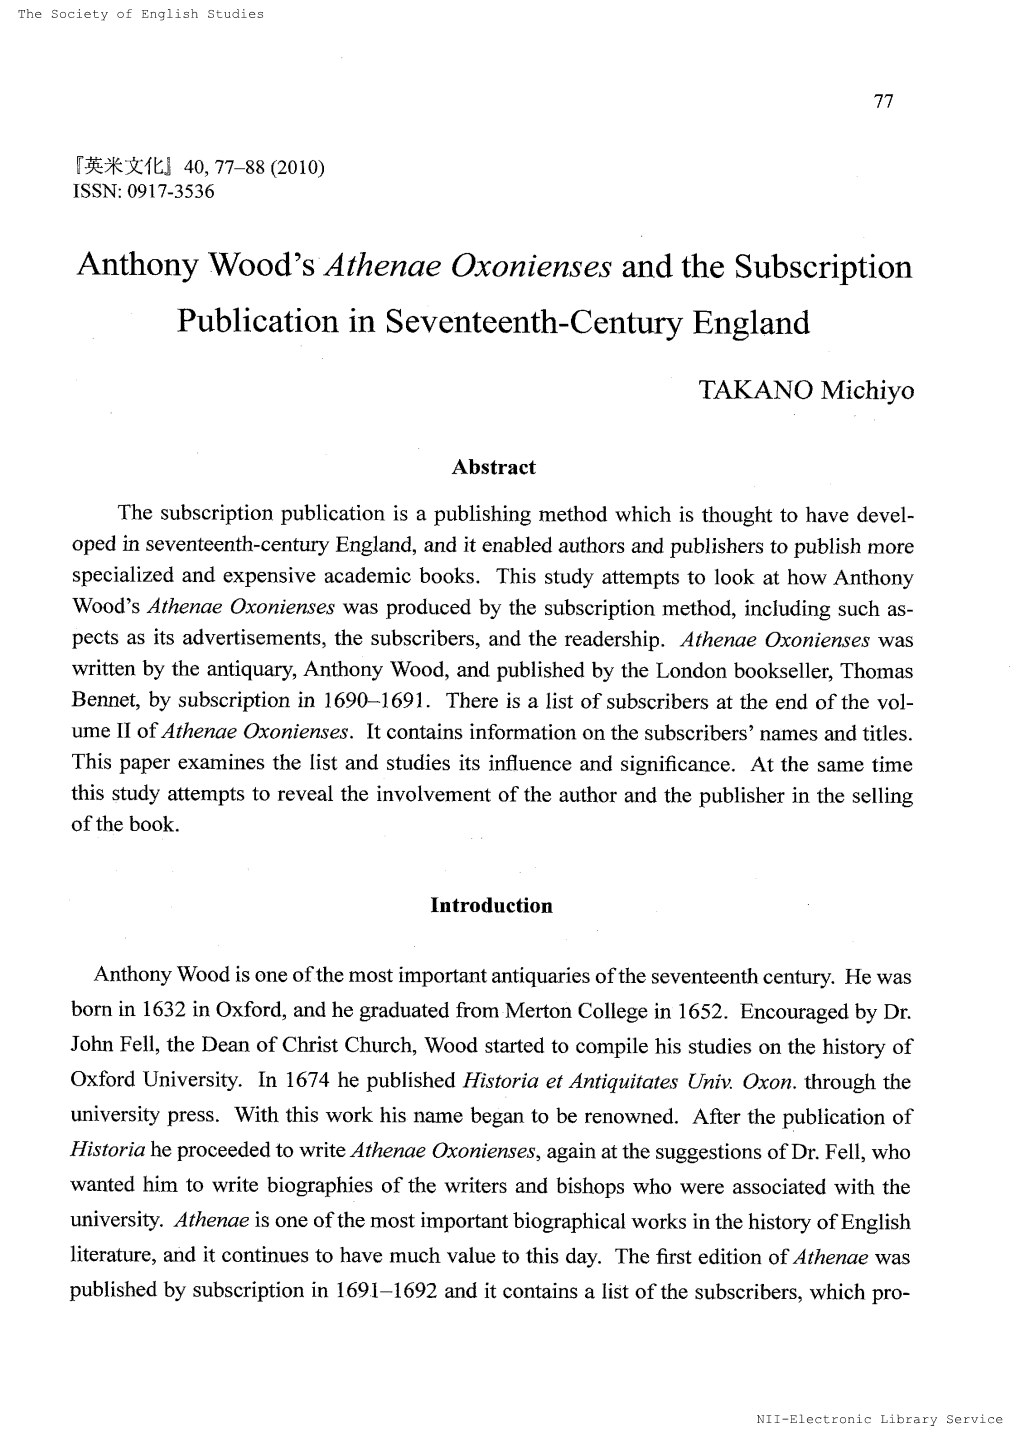 Anthony Wood's Athenae Oxoniensesand the Subscription